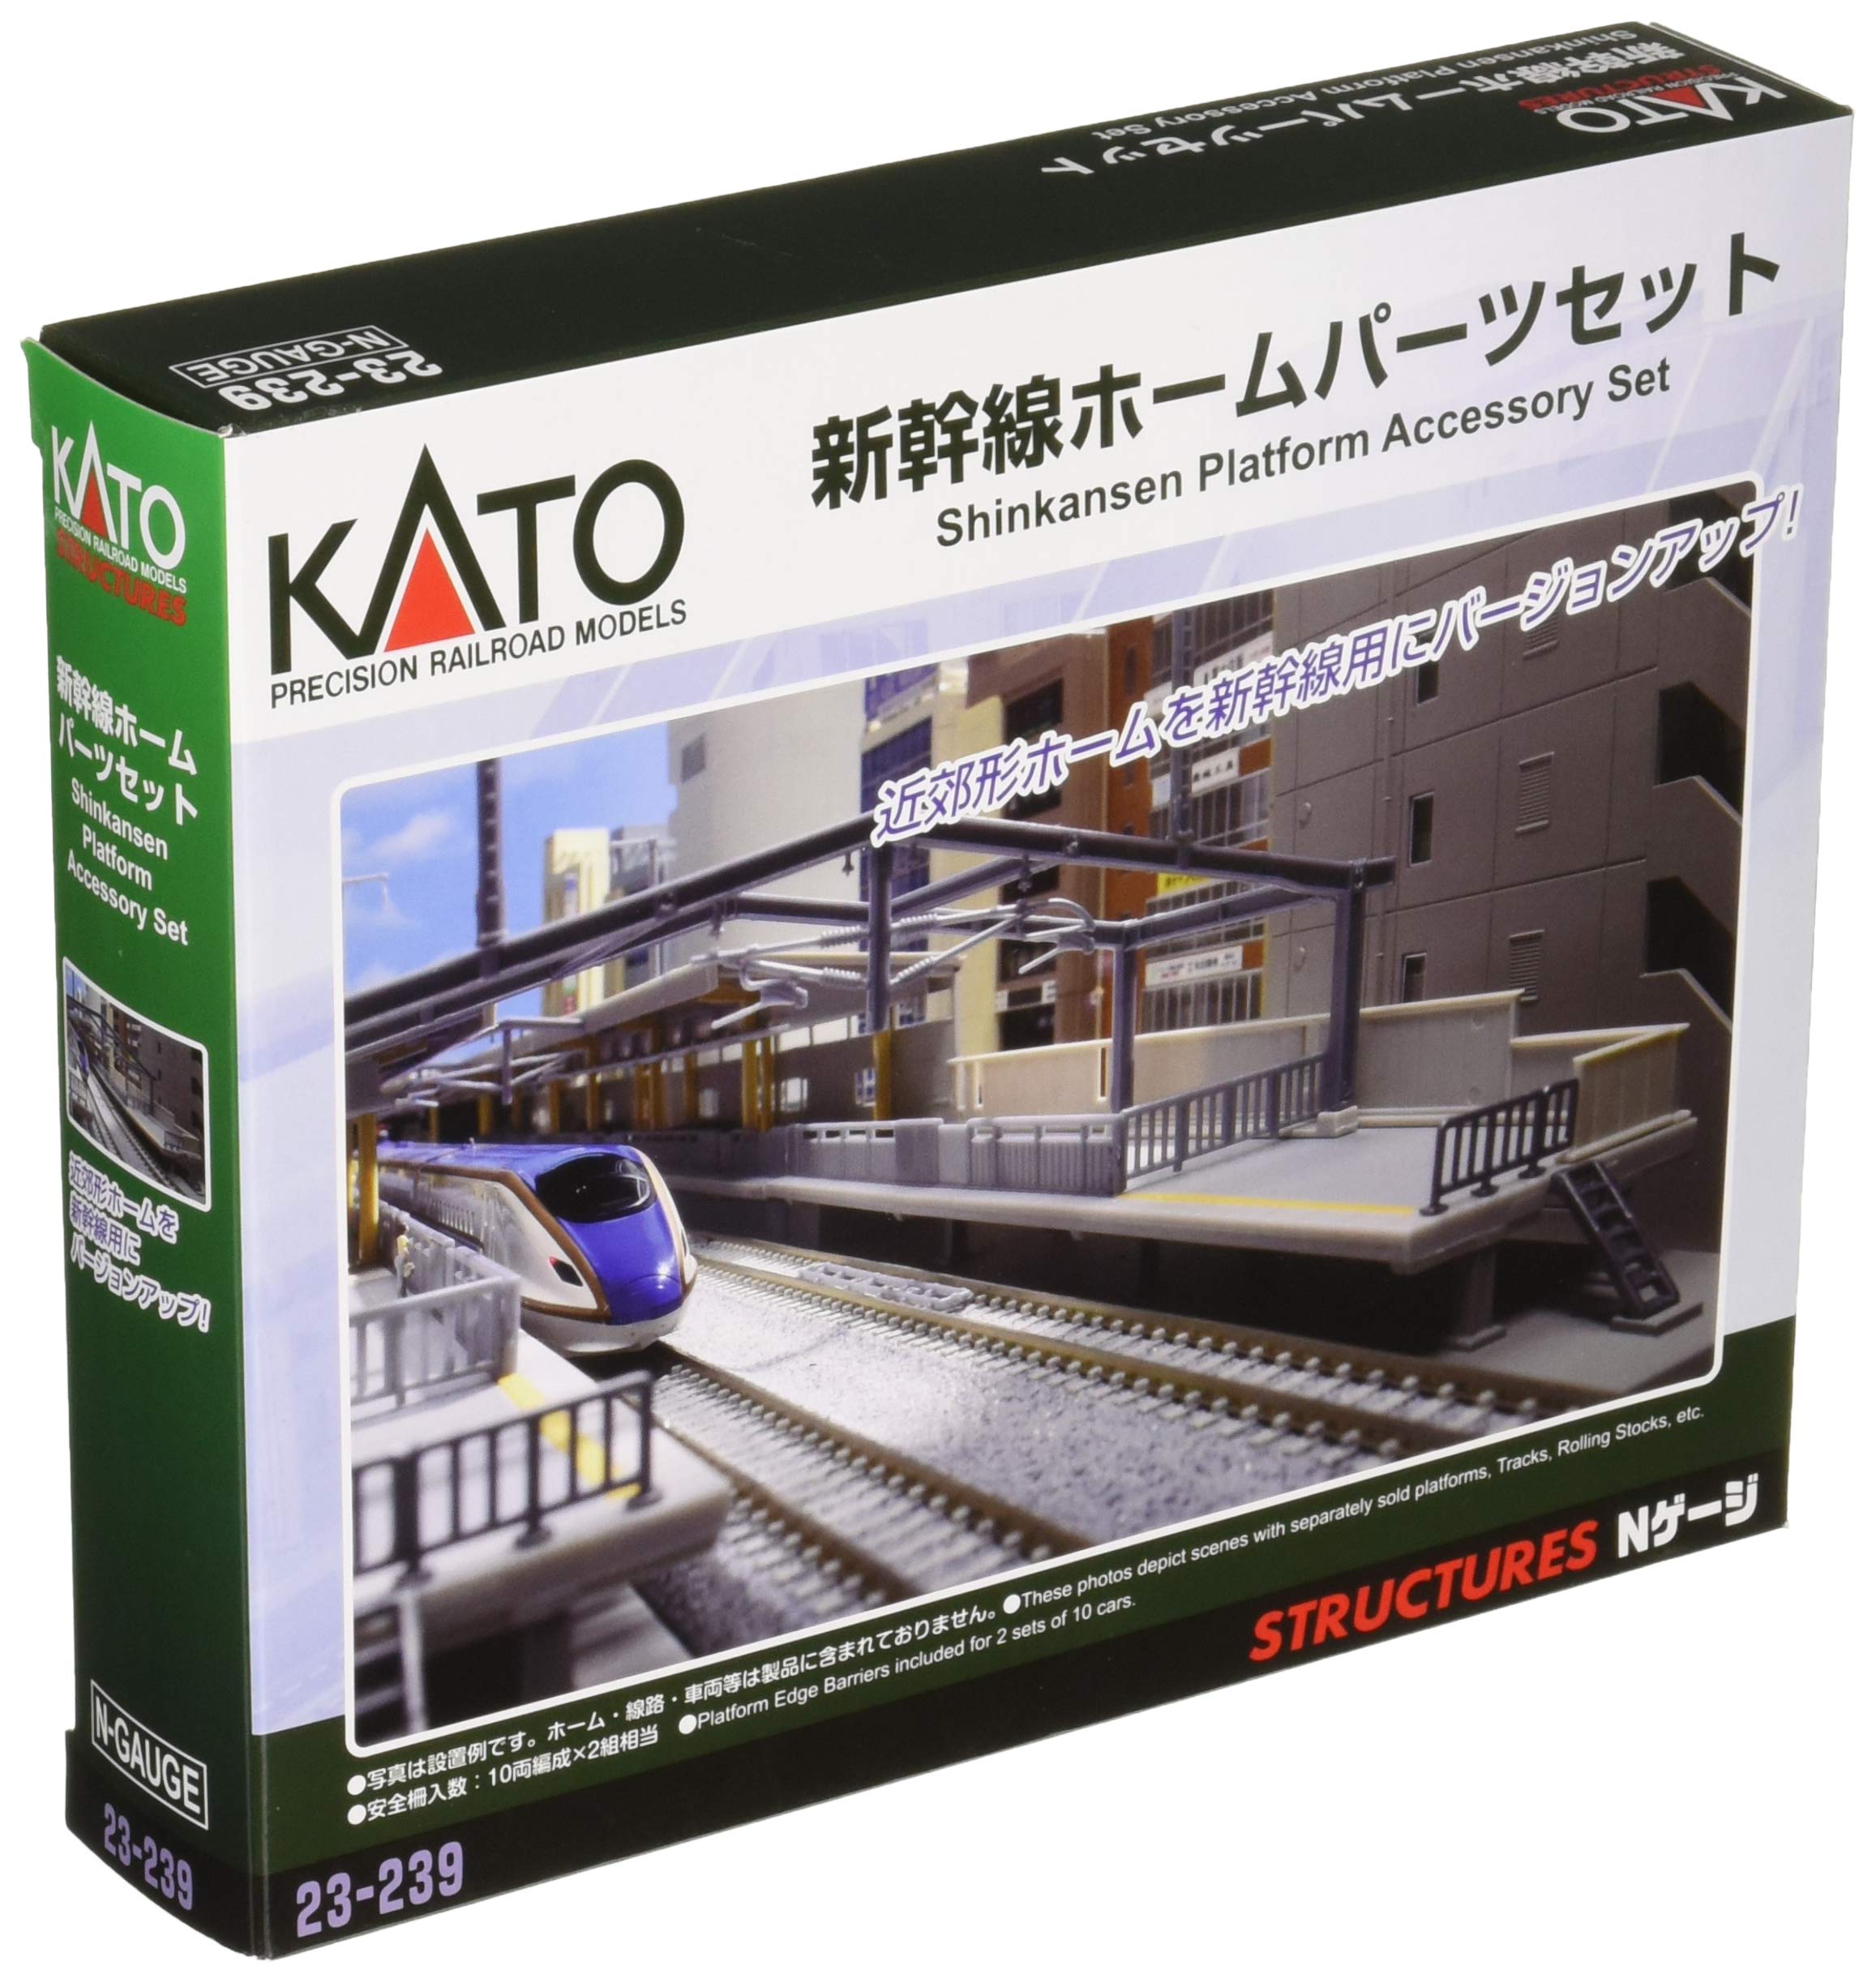 Kato N Gauge Shinkansen Home Parts Set 23-239 for Railway Model Building